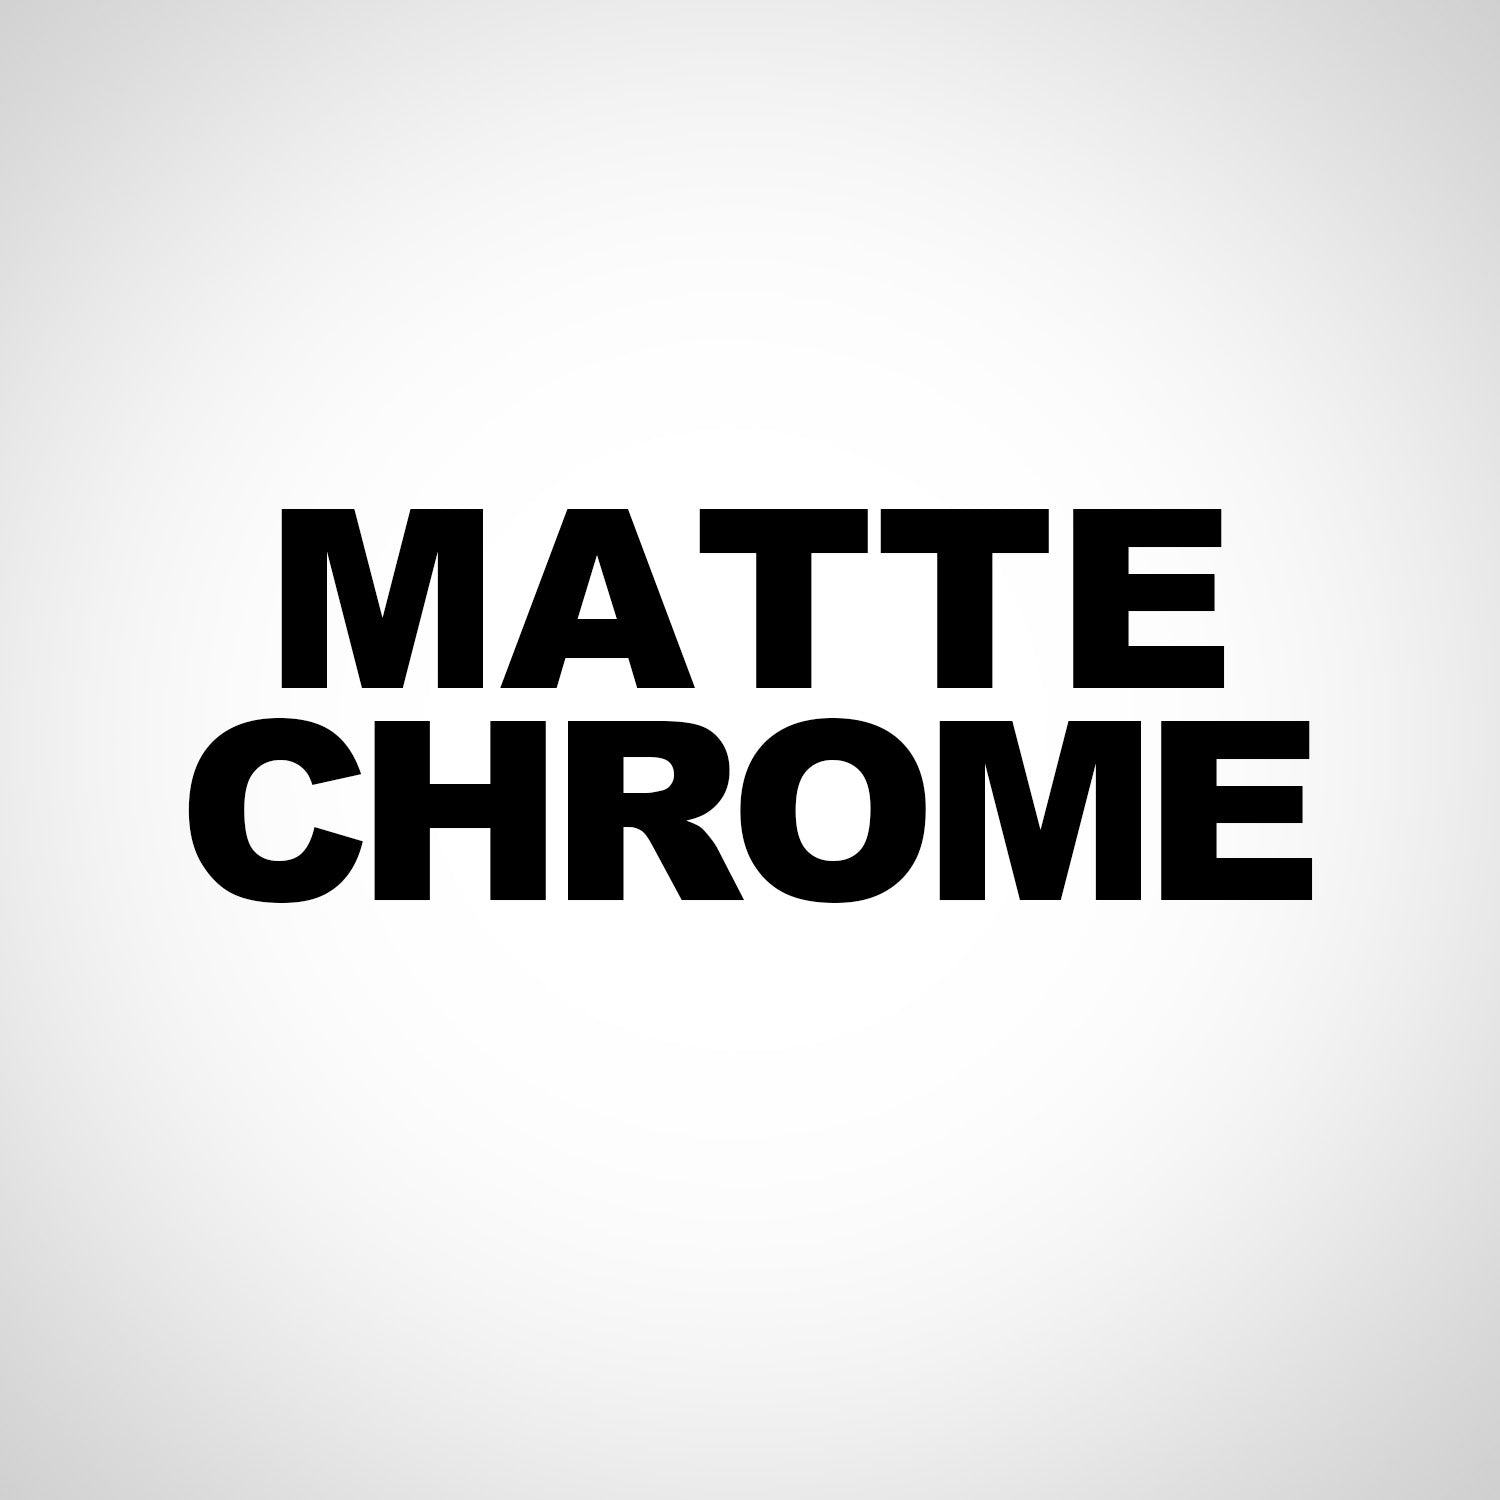 MATTE CHROME